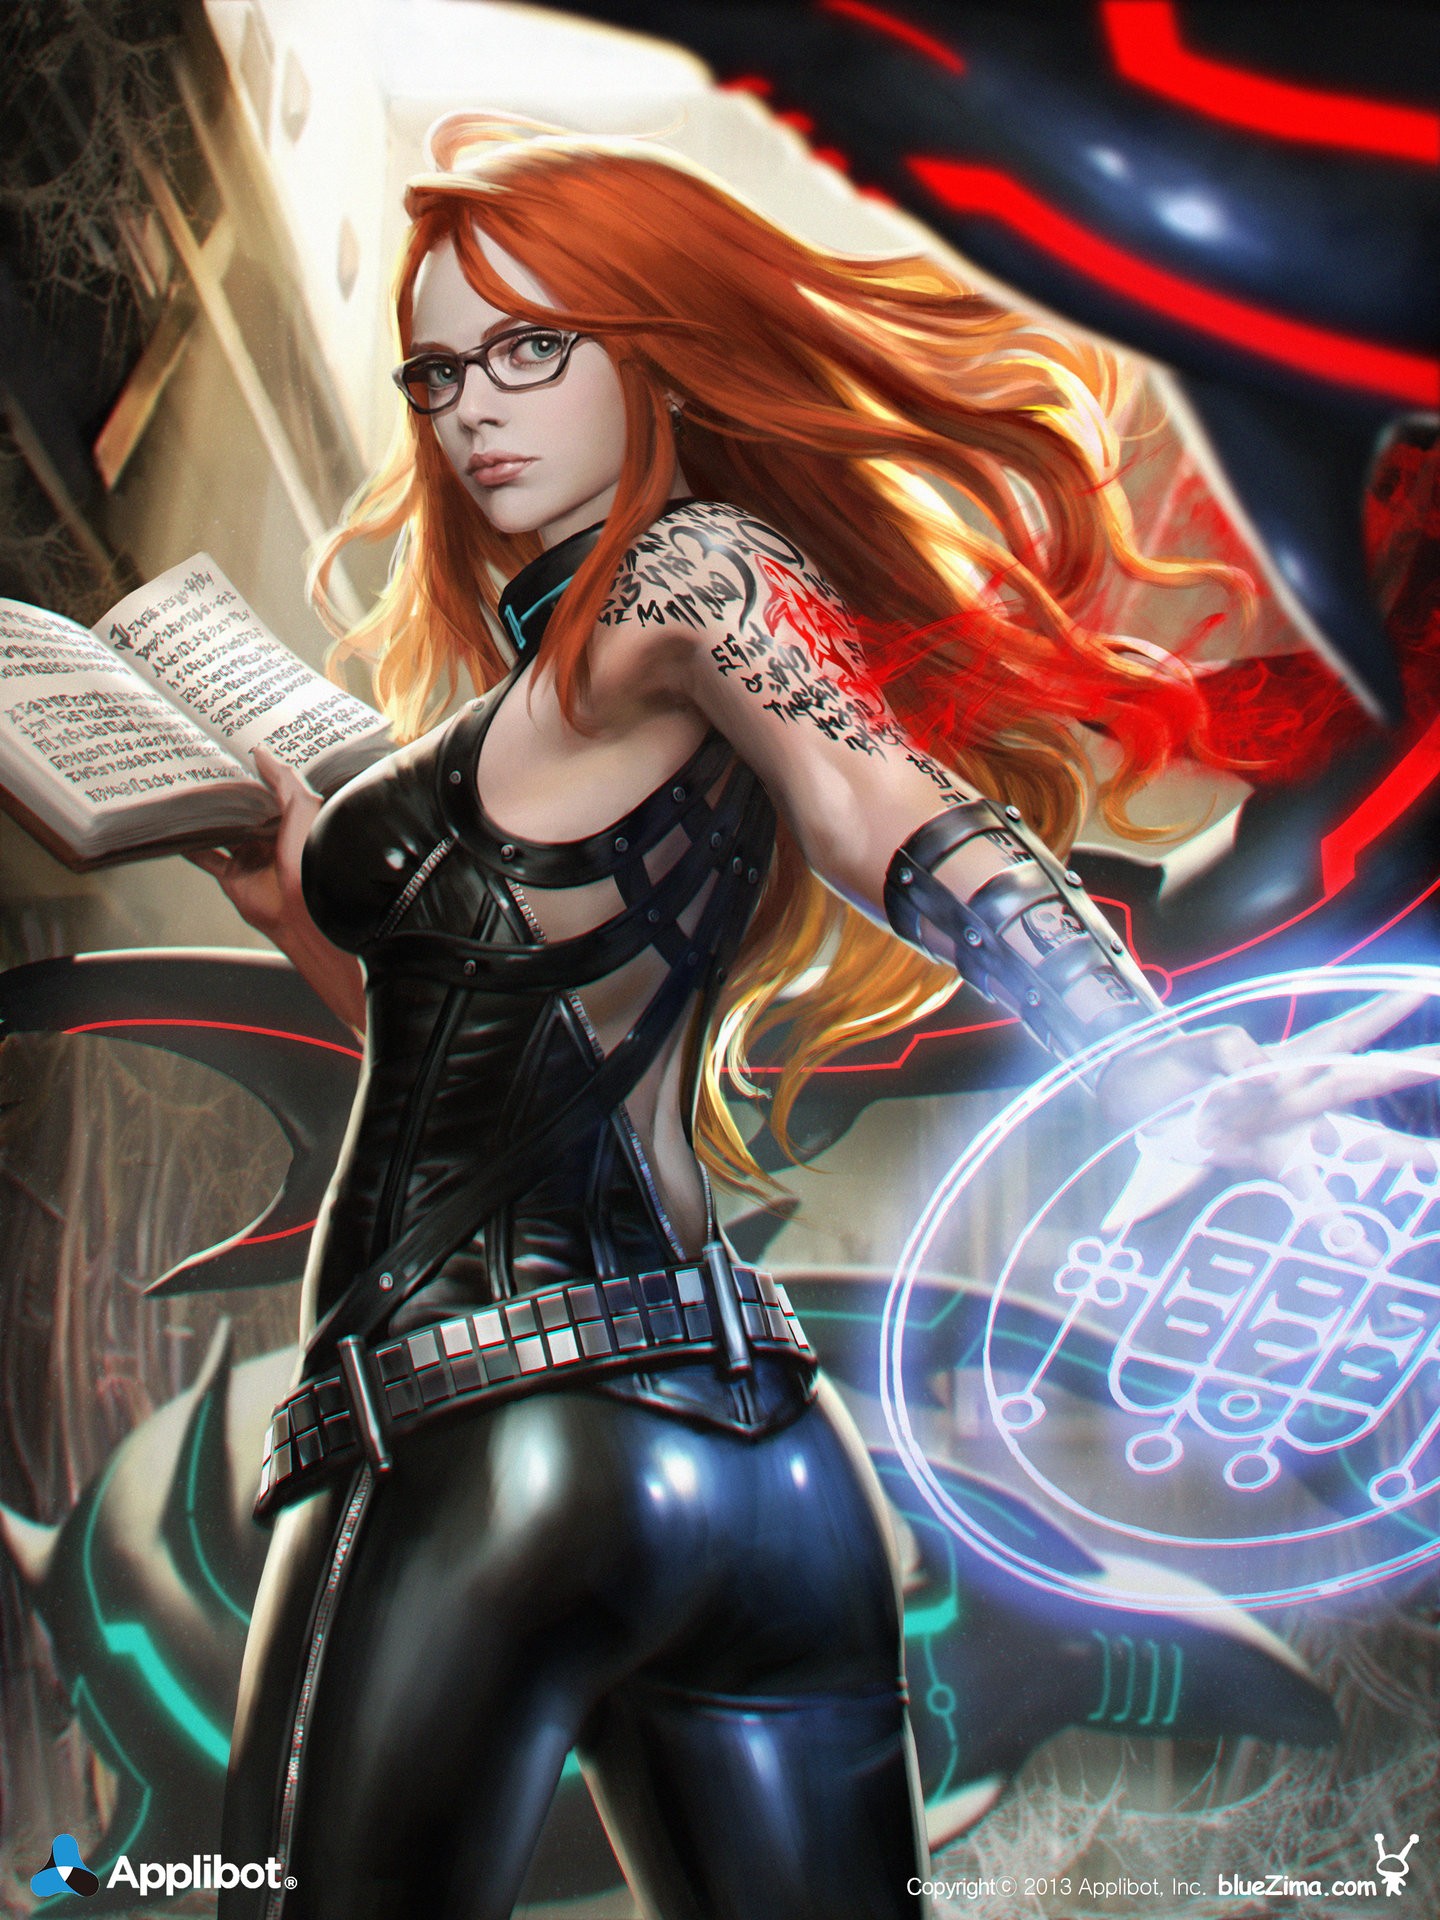 General 1440x1920 fantasy girl ass tattoo redhead long hair glasses books women fantasy art 2013 (Year) women with glasses